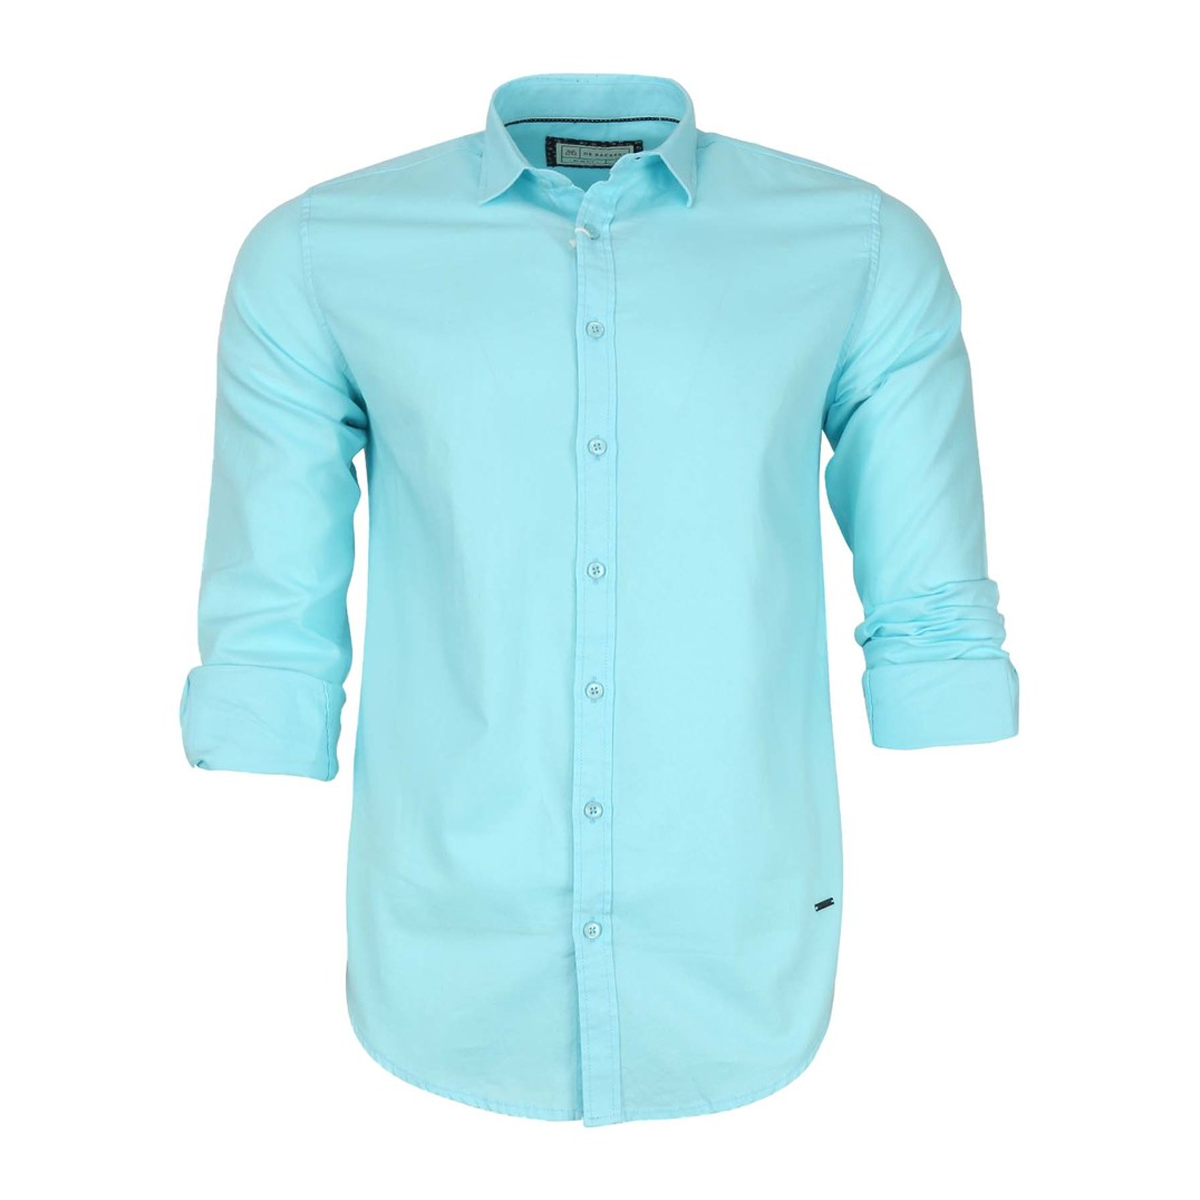 Men's Casual Shirt Long Sleeve 2025 Sky Blue - Debackers